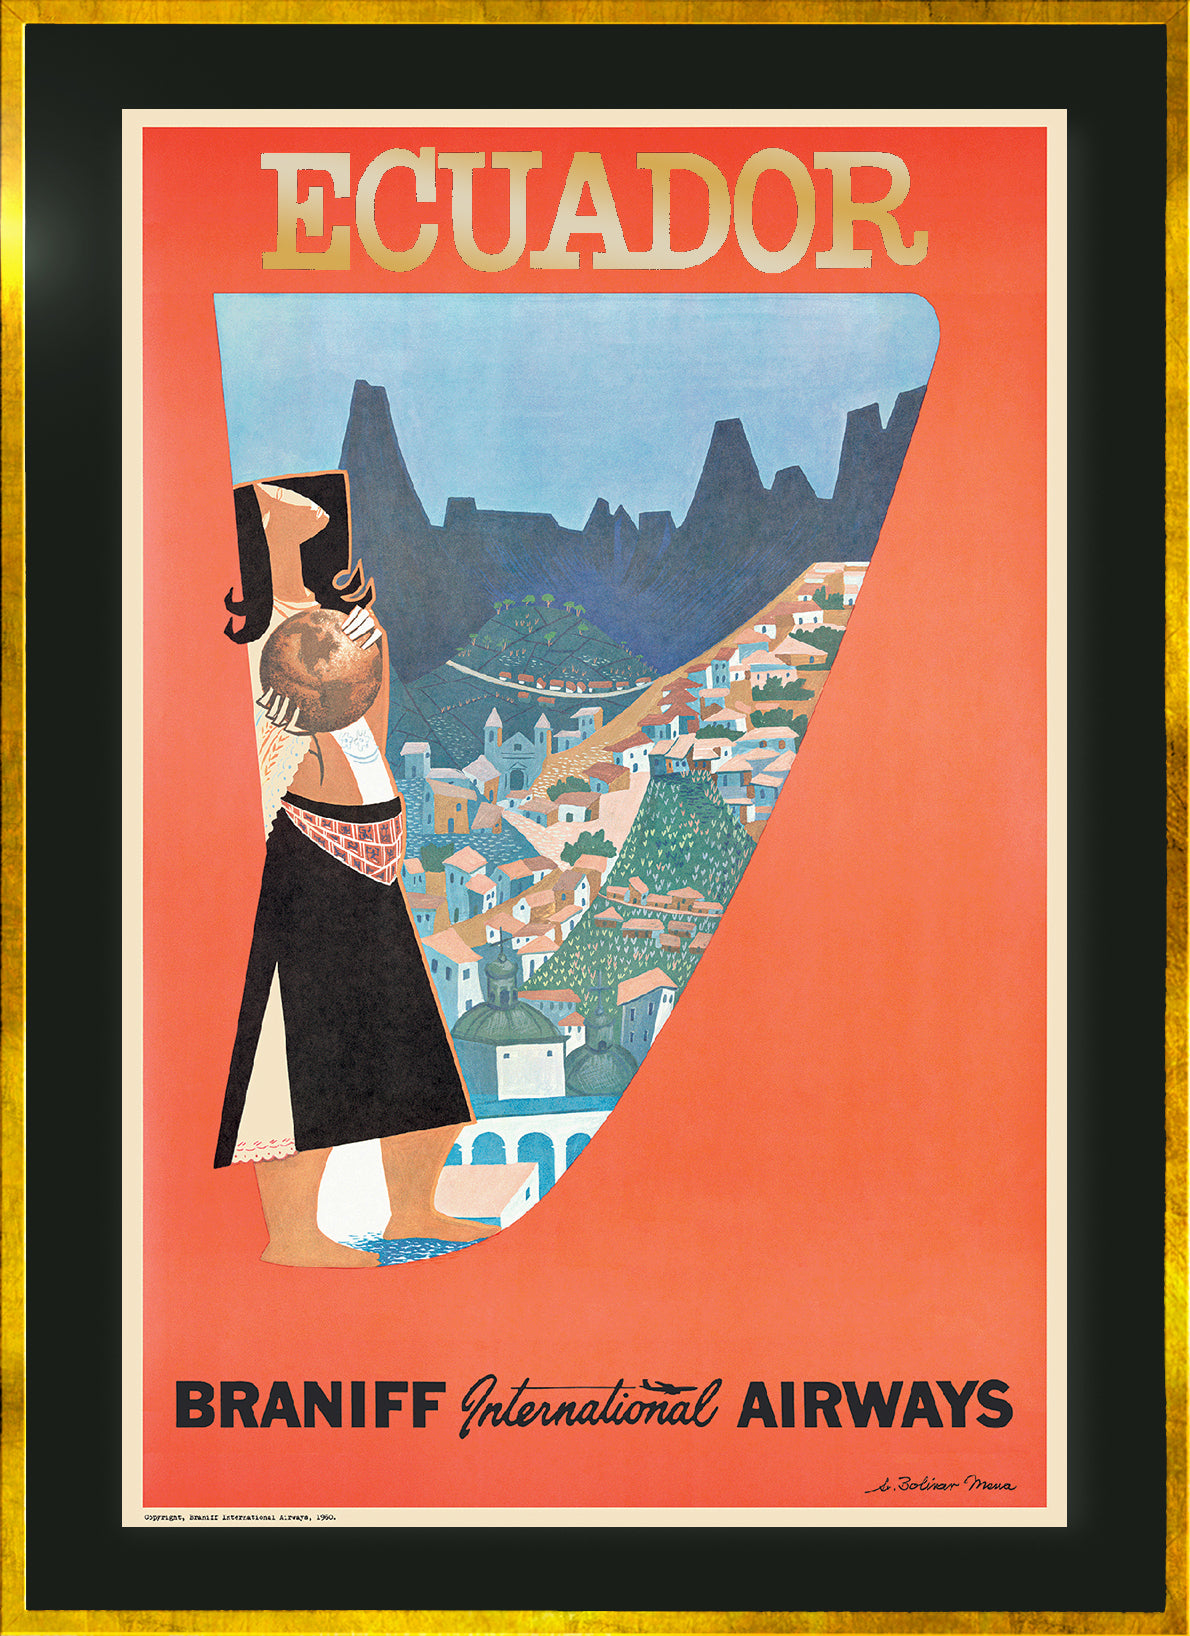 Ecuador, Braniff International Airways, 1960s [World globe].